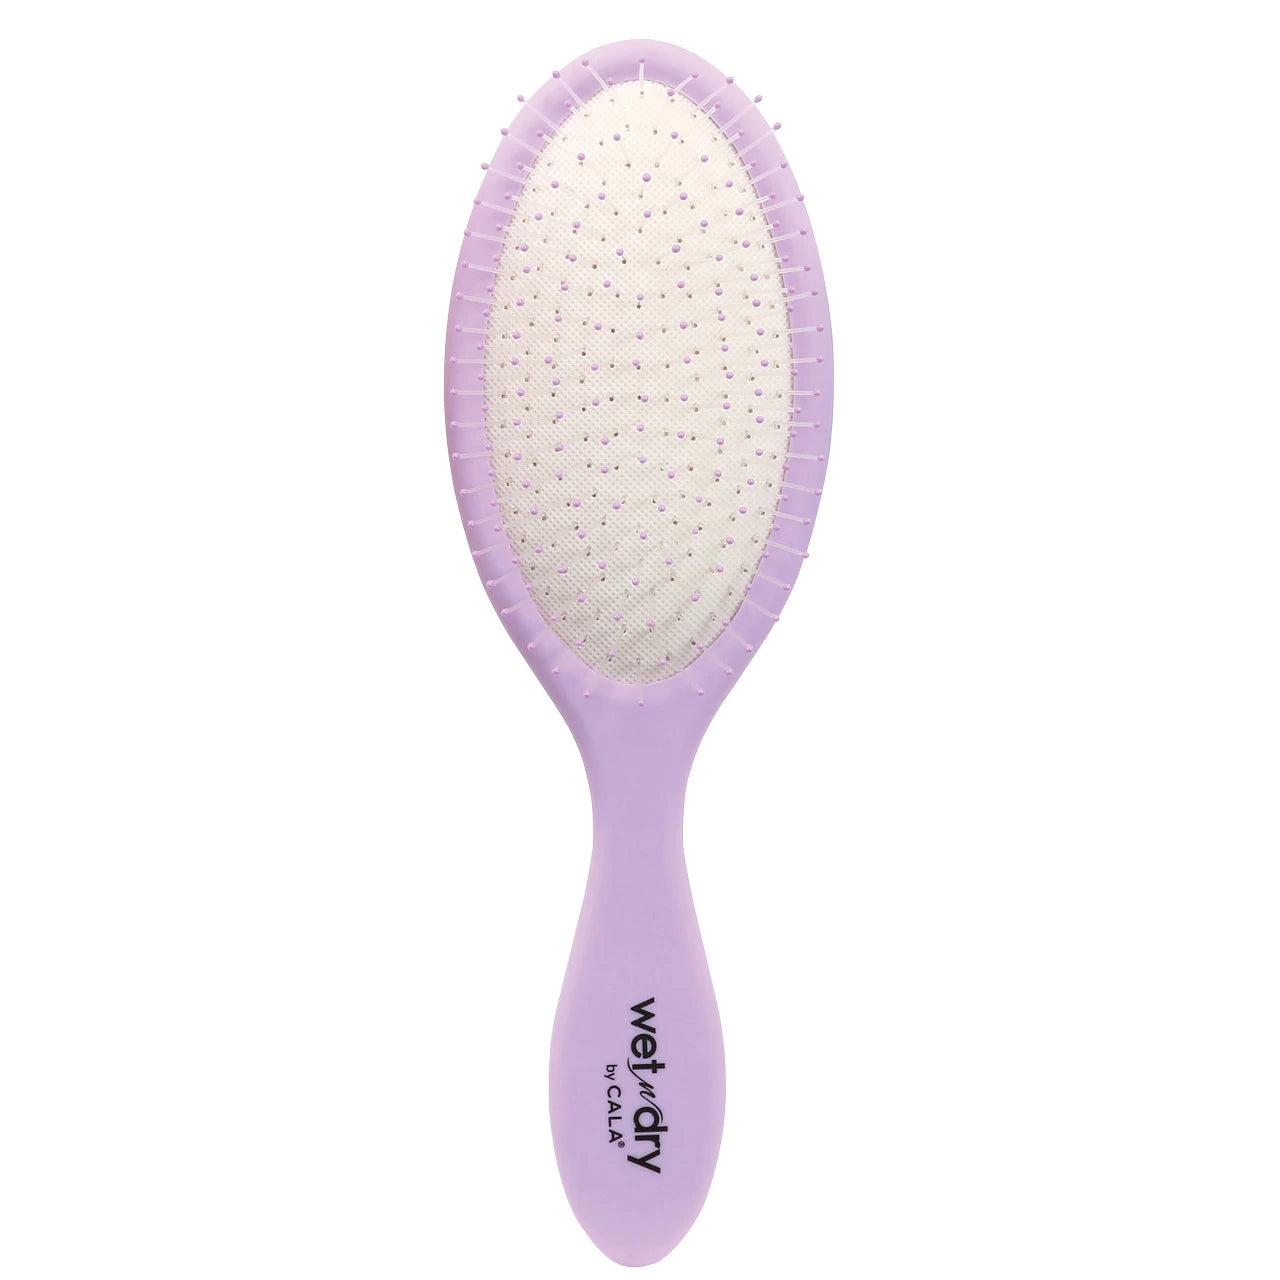 CALA Wet N Dry Hair Brush (Orange) - ADDROS.COM